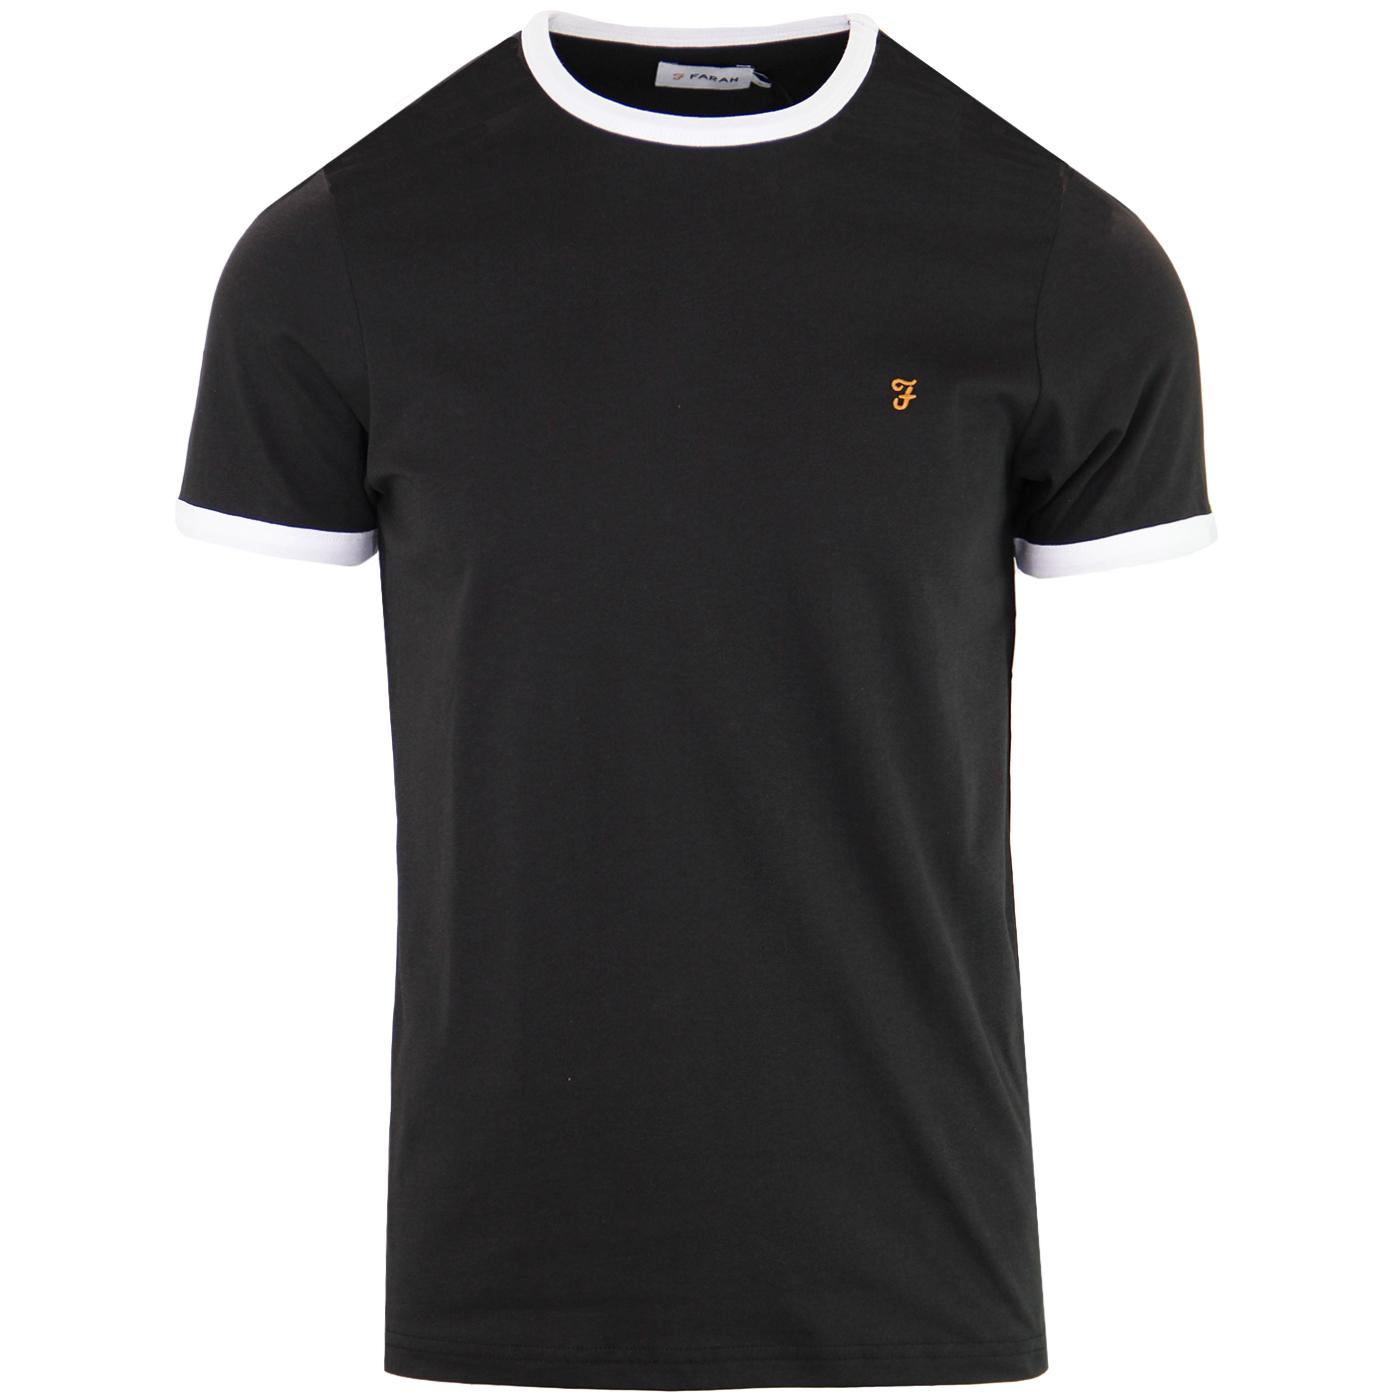 Groves FARAH Retro Mod Ringer T-Shirt (Deep Black)